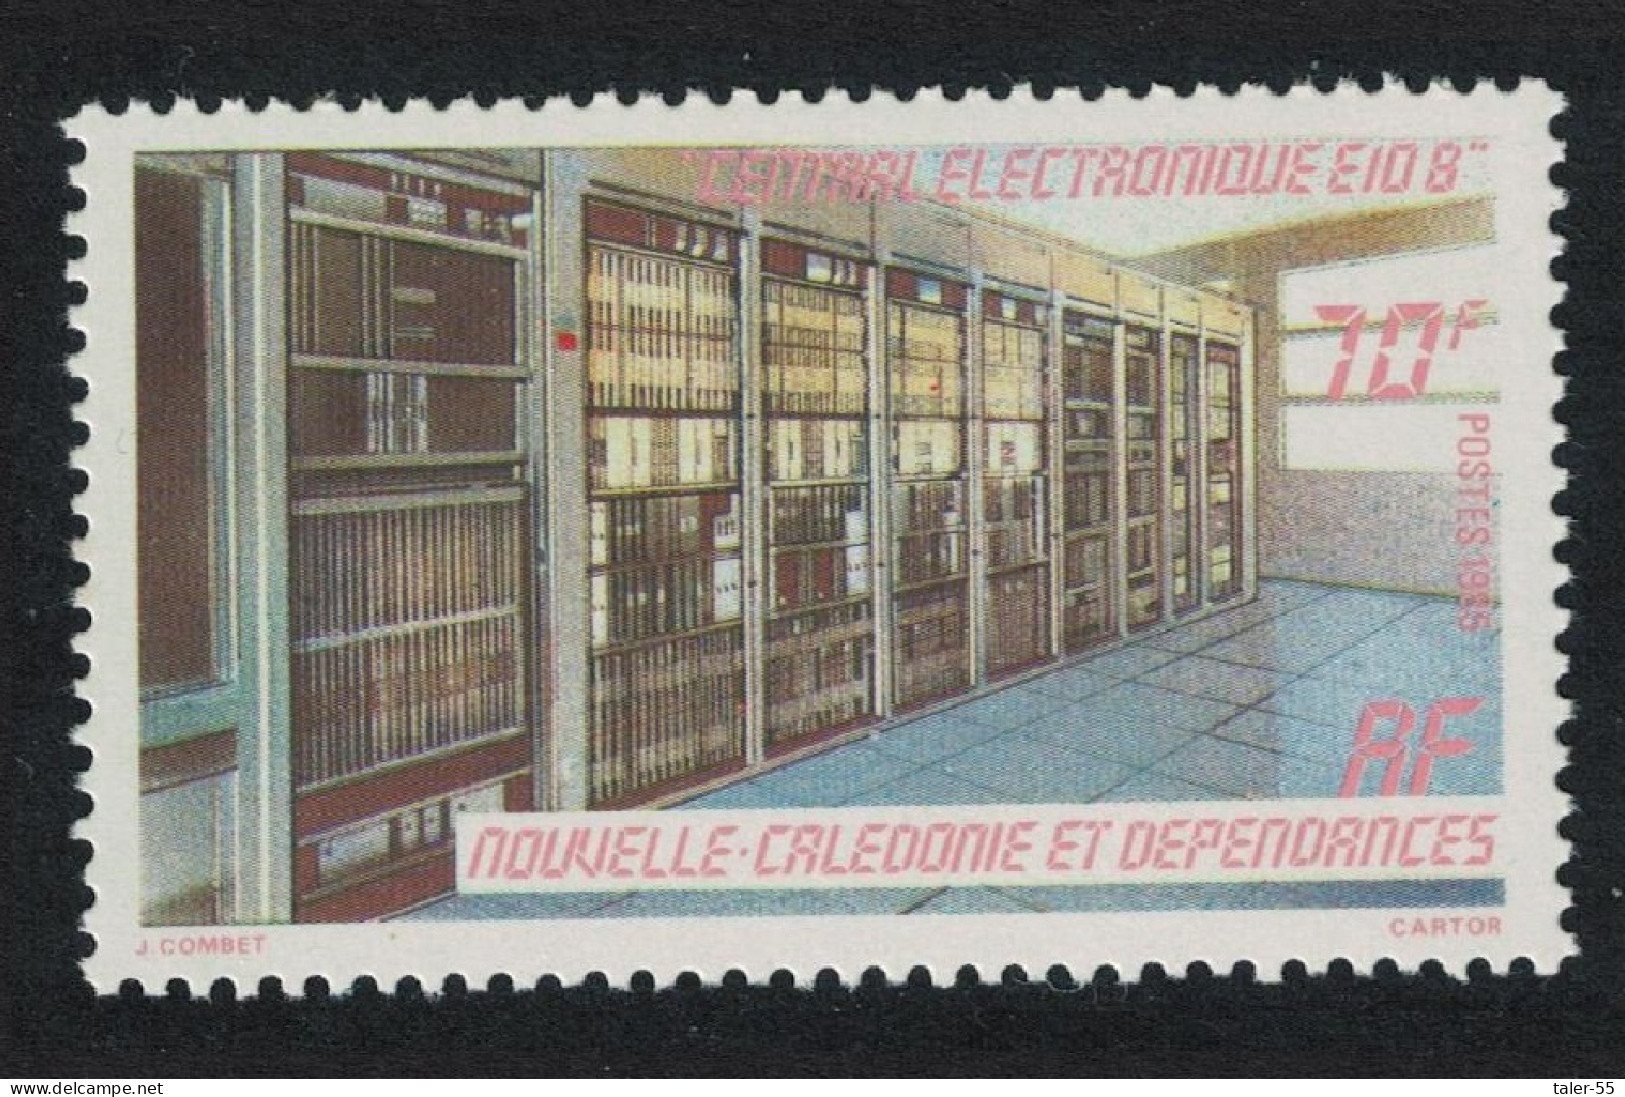 New Caledonia Inauguration Of Electronic Telephone Equipment 1985 MNH SG#765 - Ungebraucht